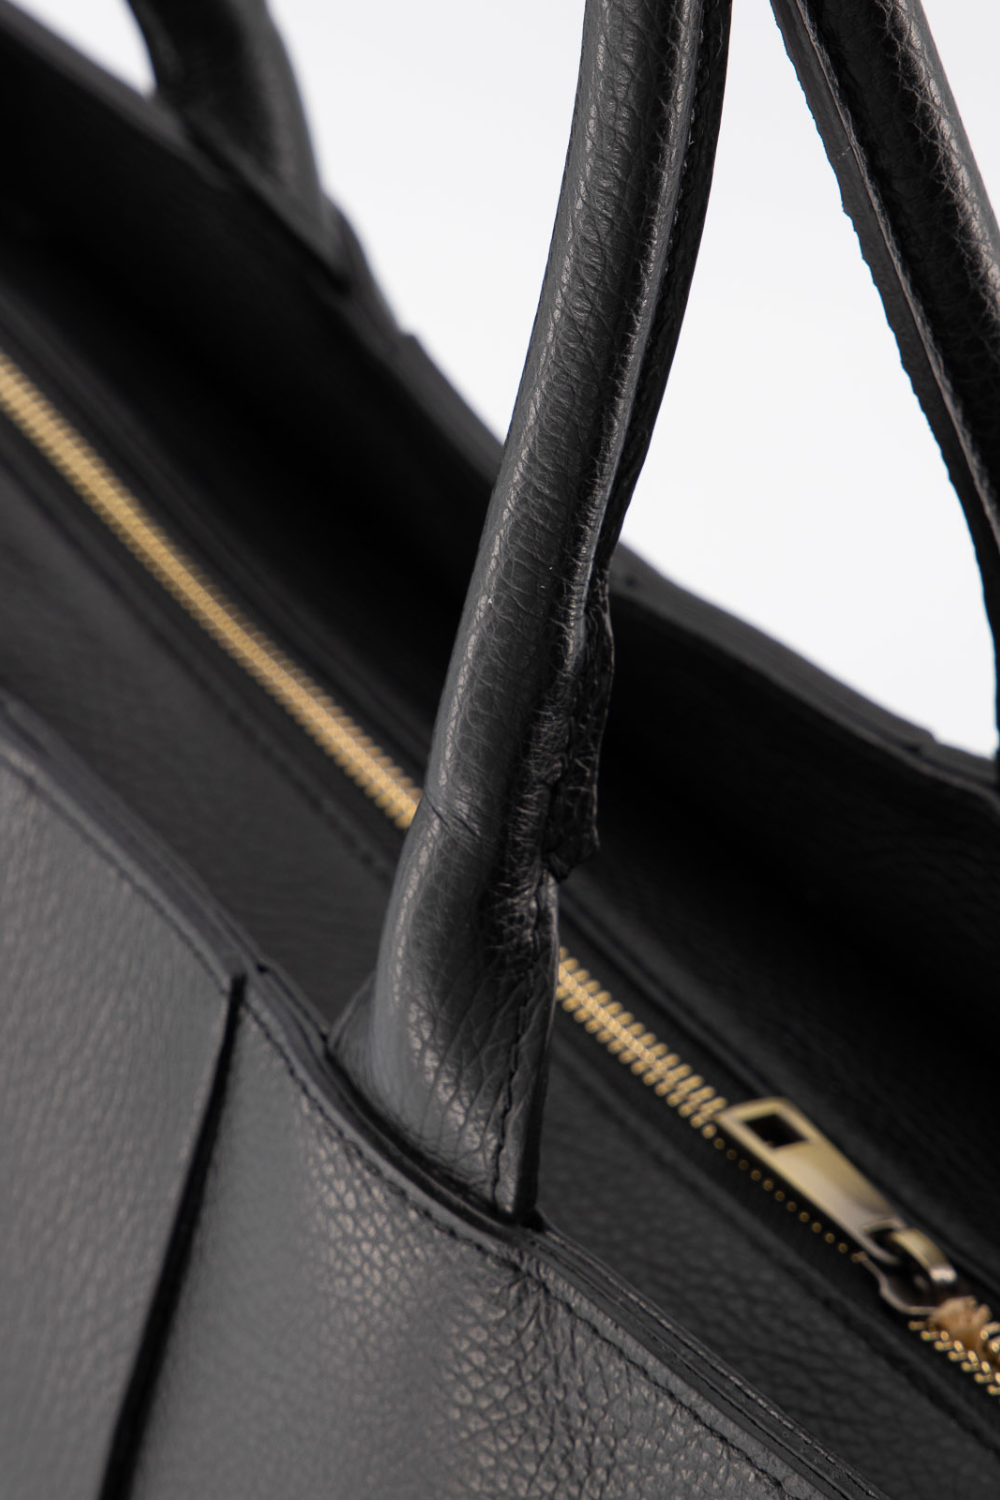 Bag Sharon Leather | Black